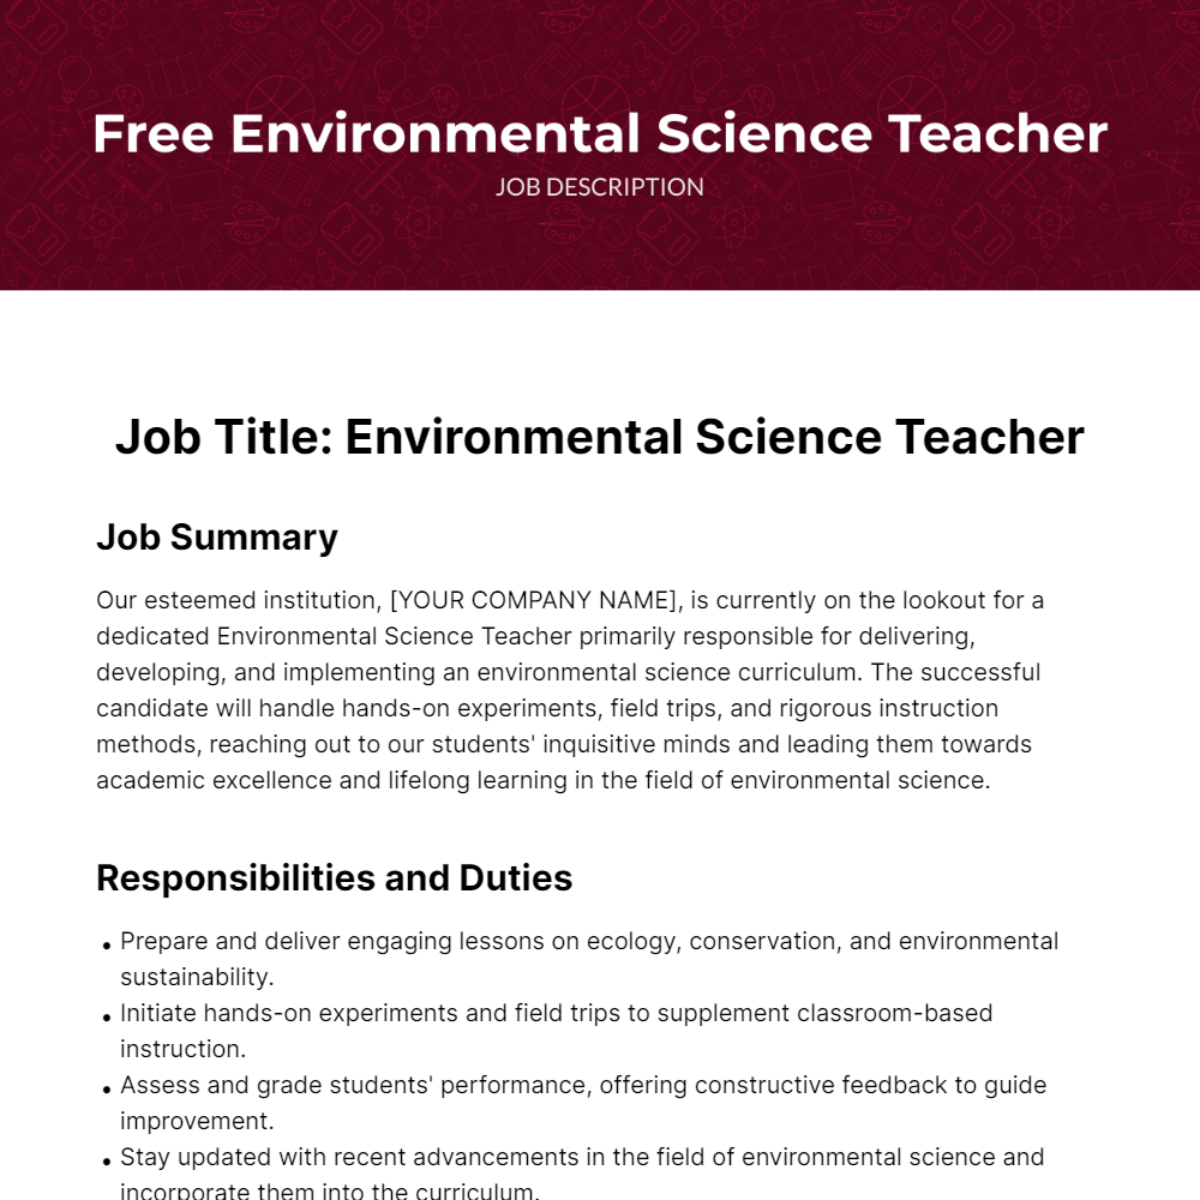 Environmental Science Teacher Job Description Template